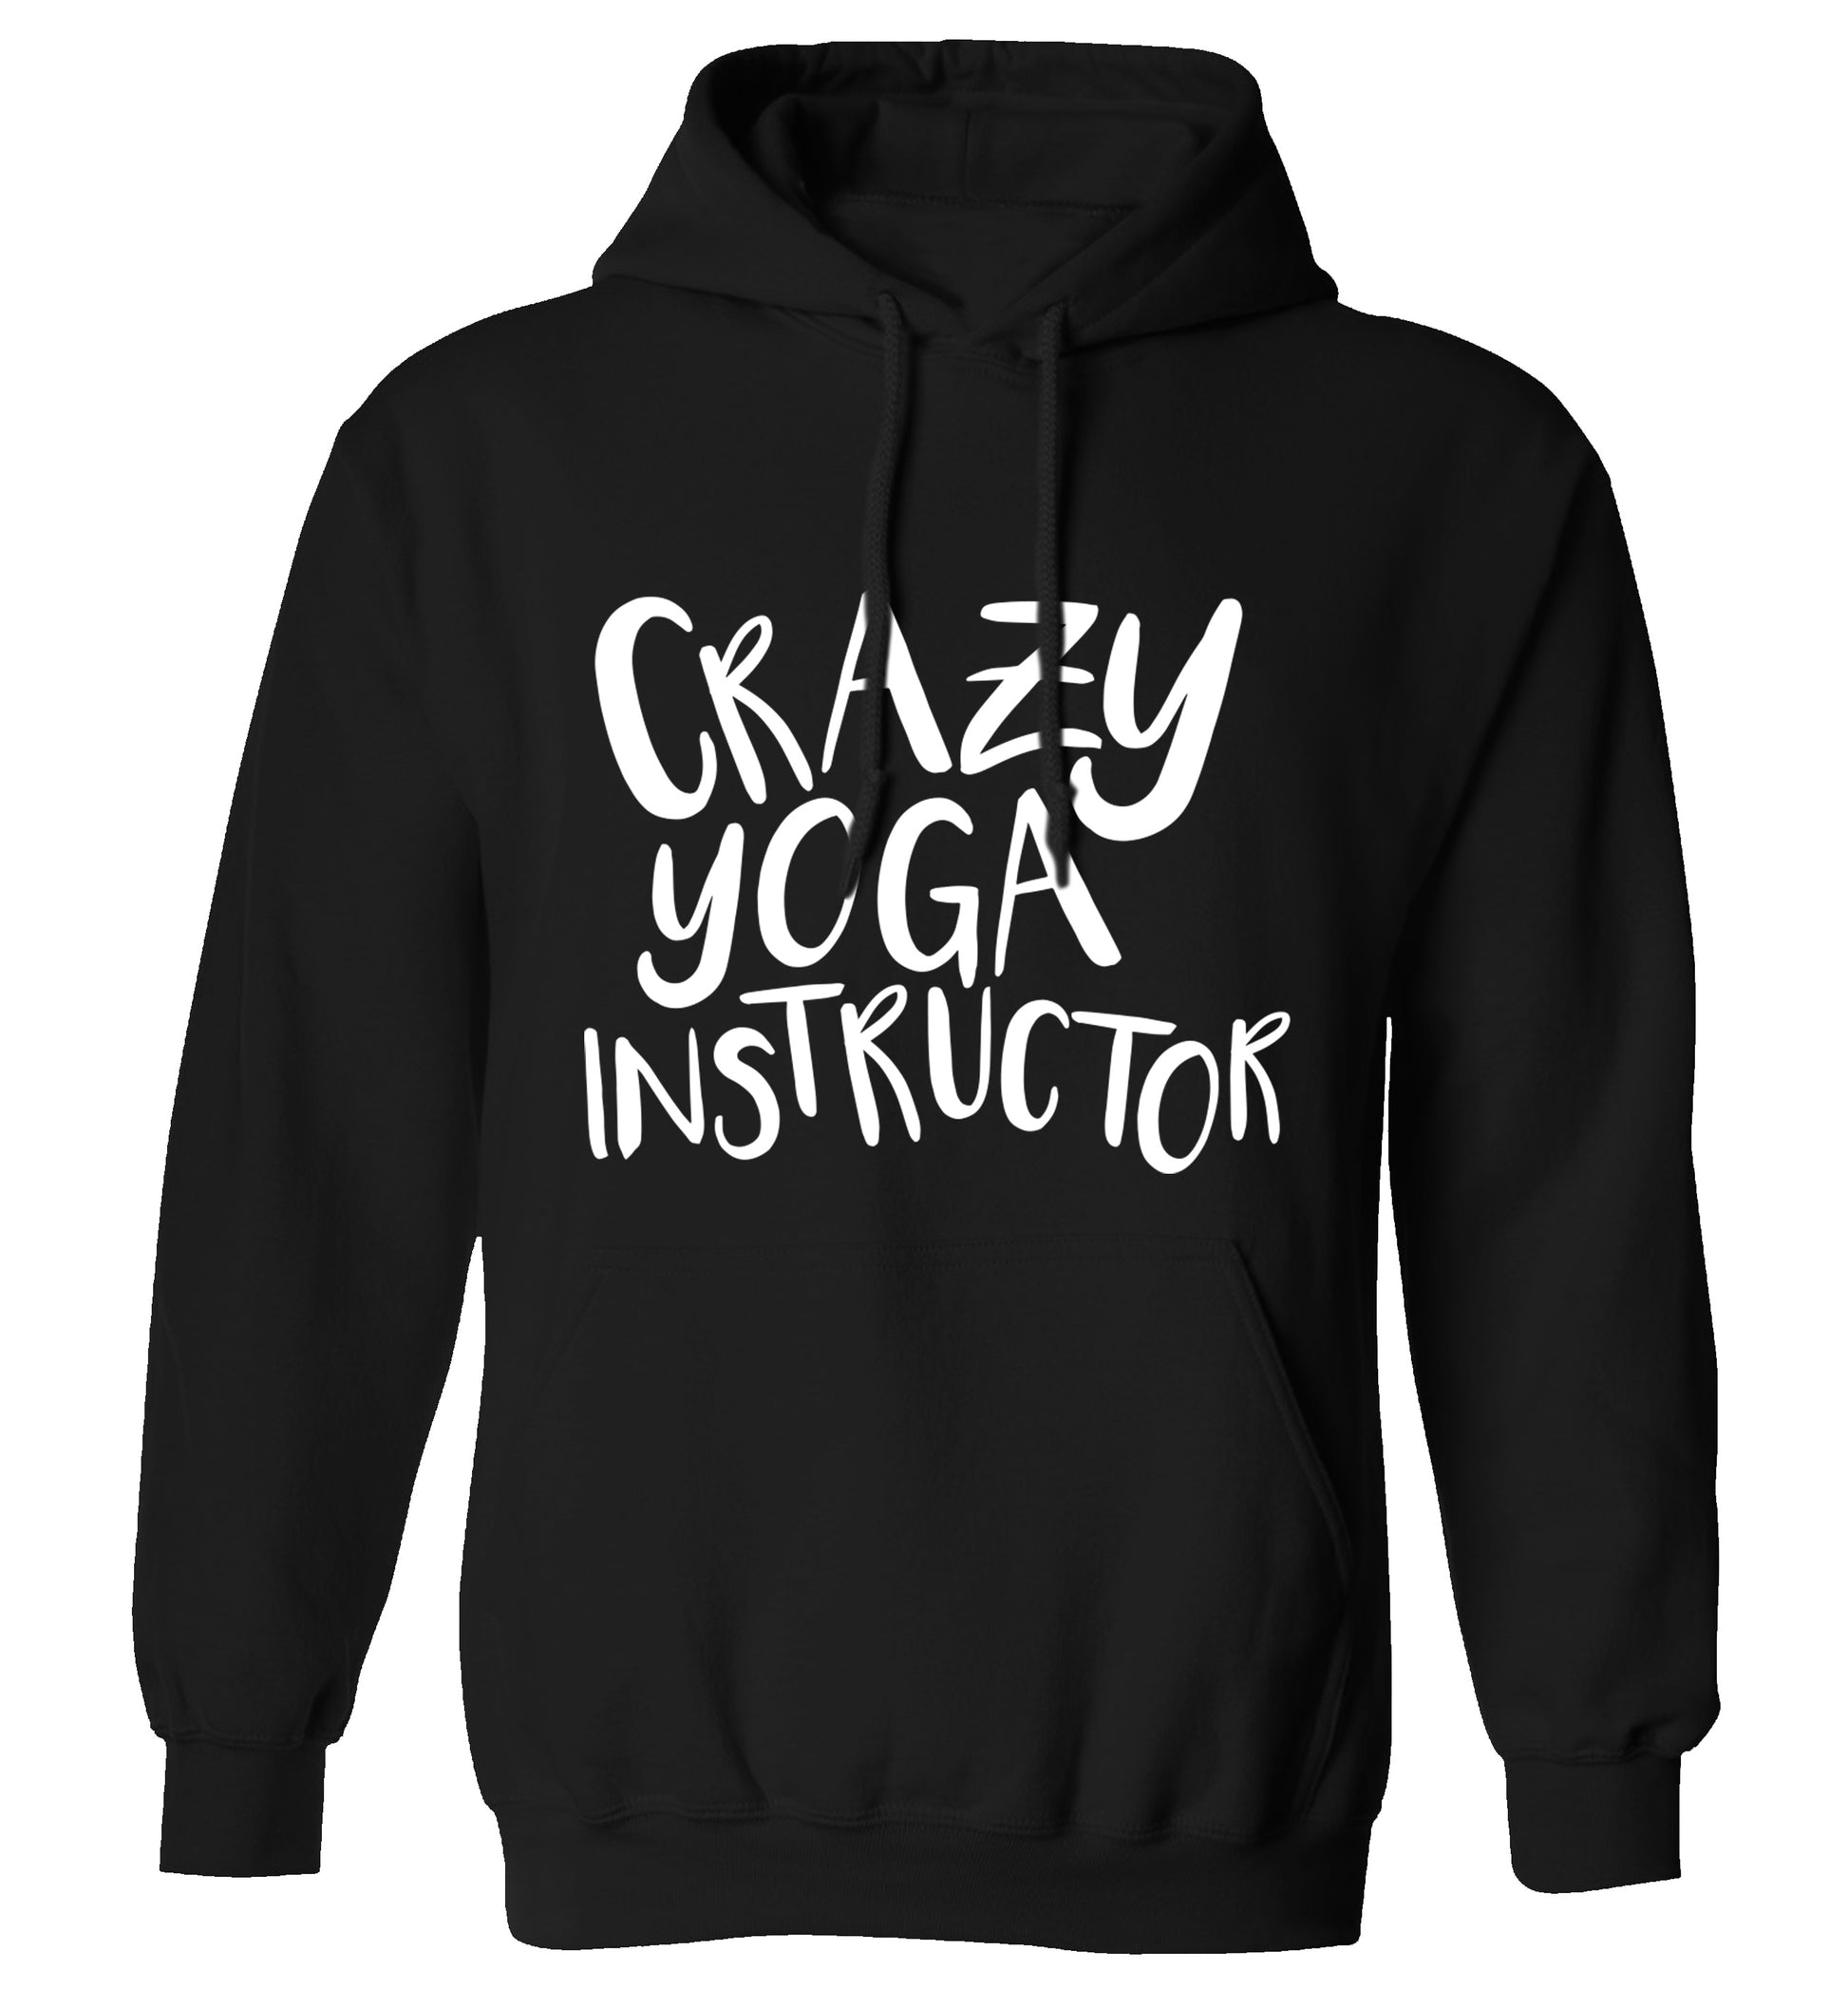 Crazy yoga instructor adults unisex black hoodie 2XL